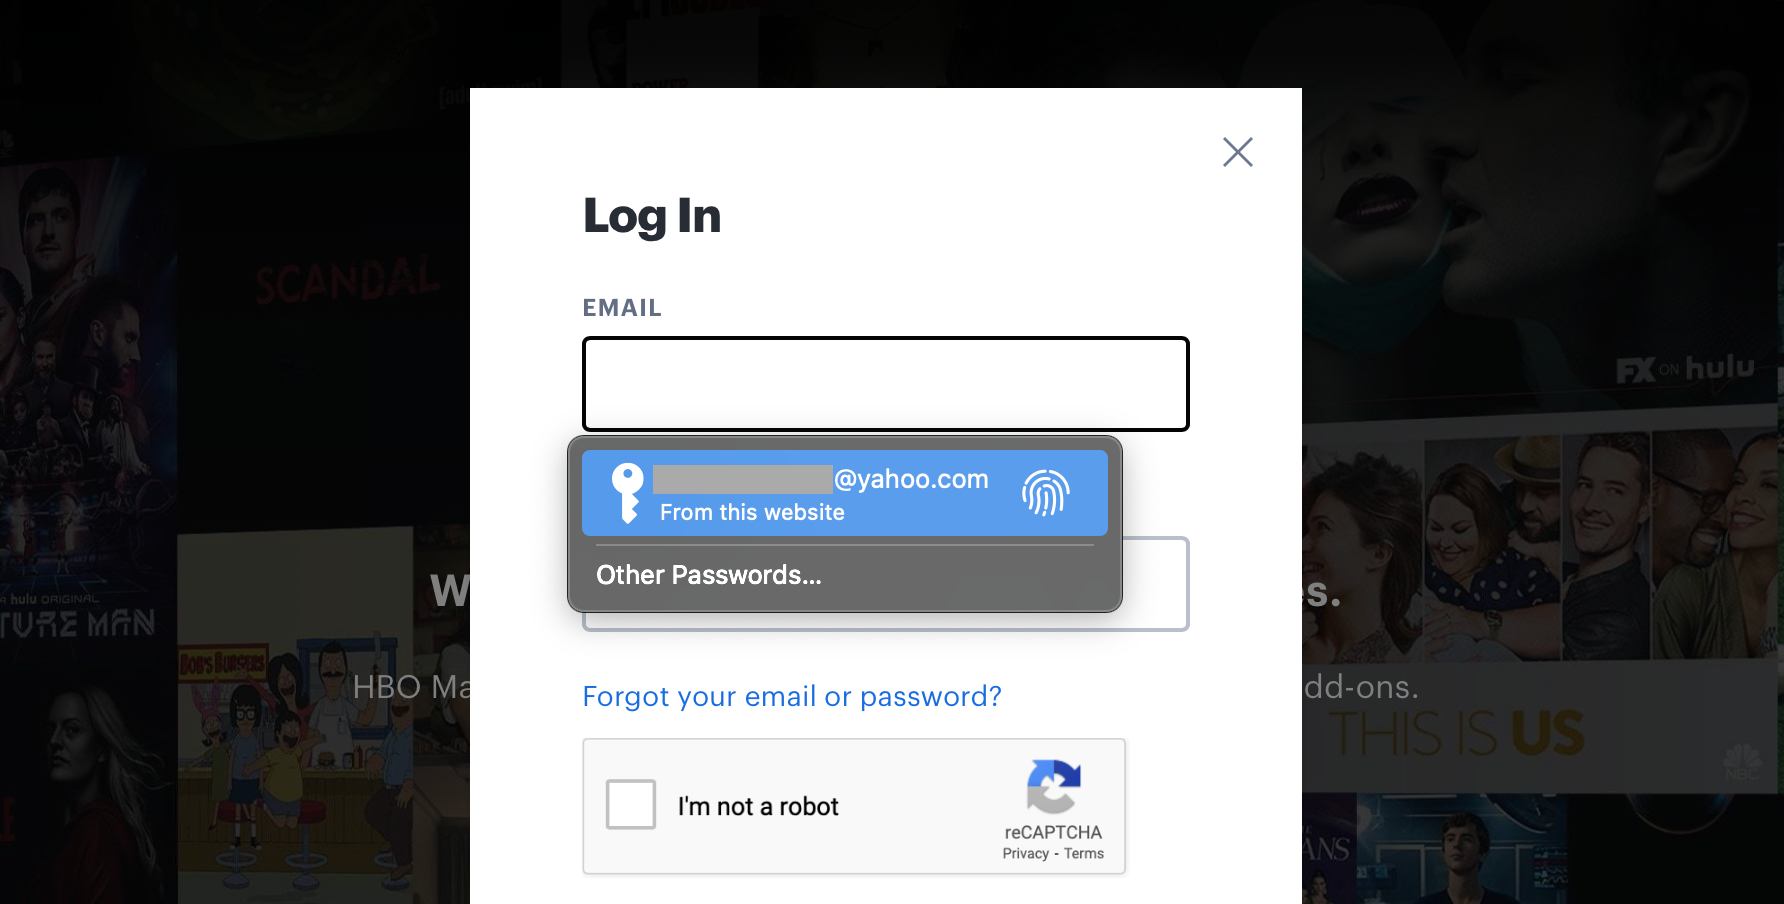 Login information being put into website fields via keychain on a Mac